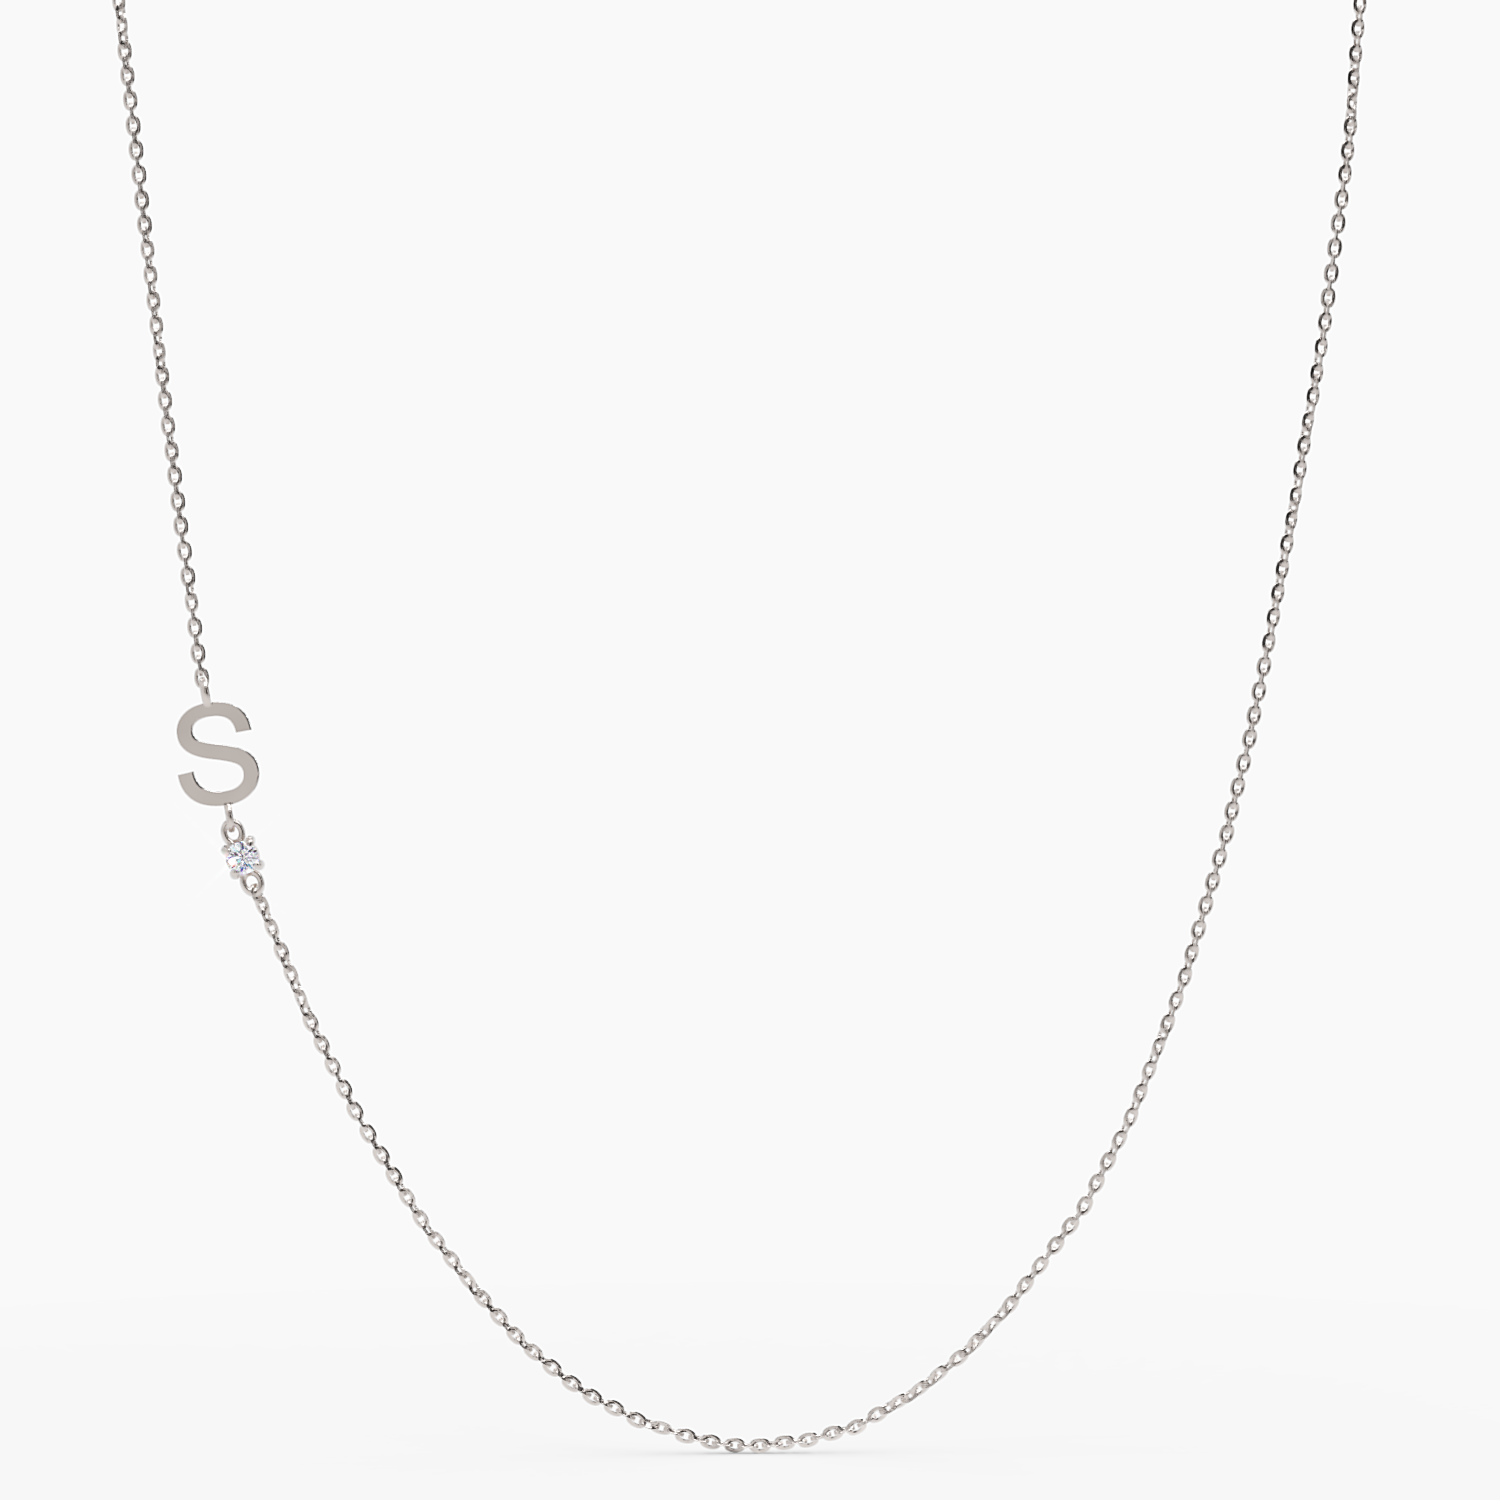 Sideways Initial S Necklace with Diamond